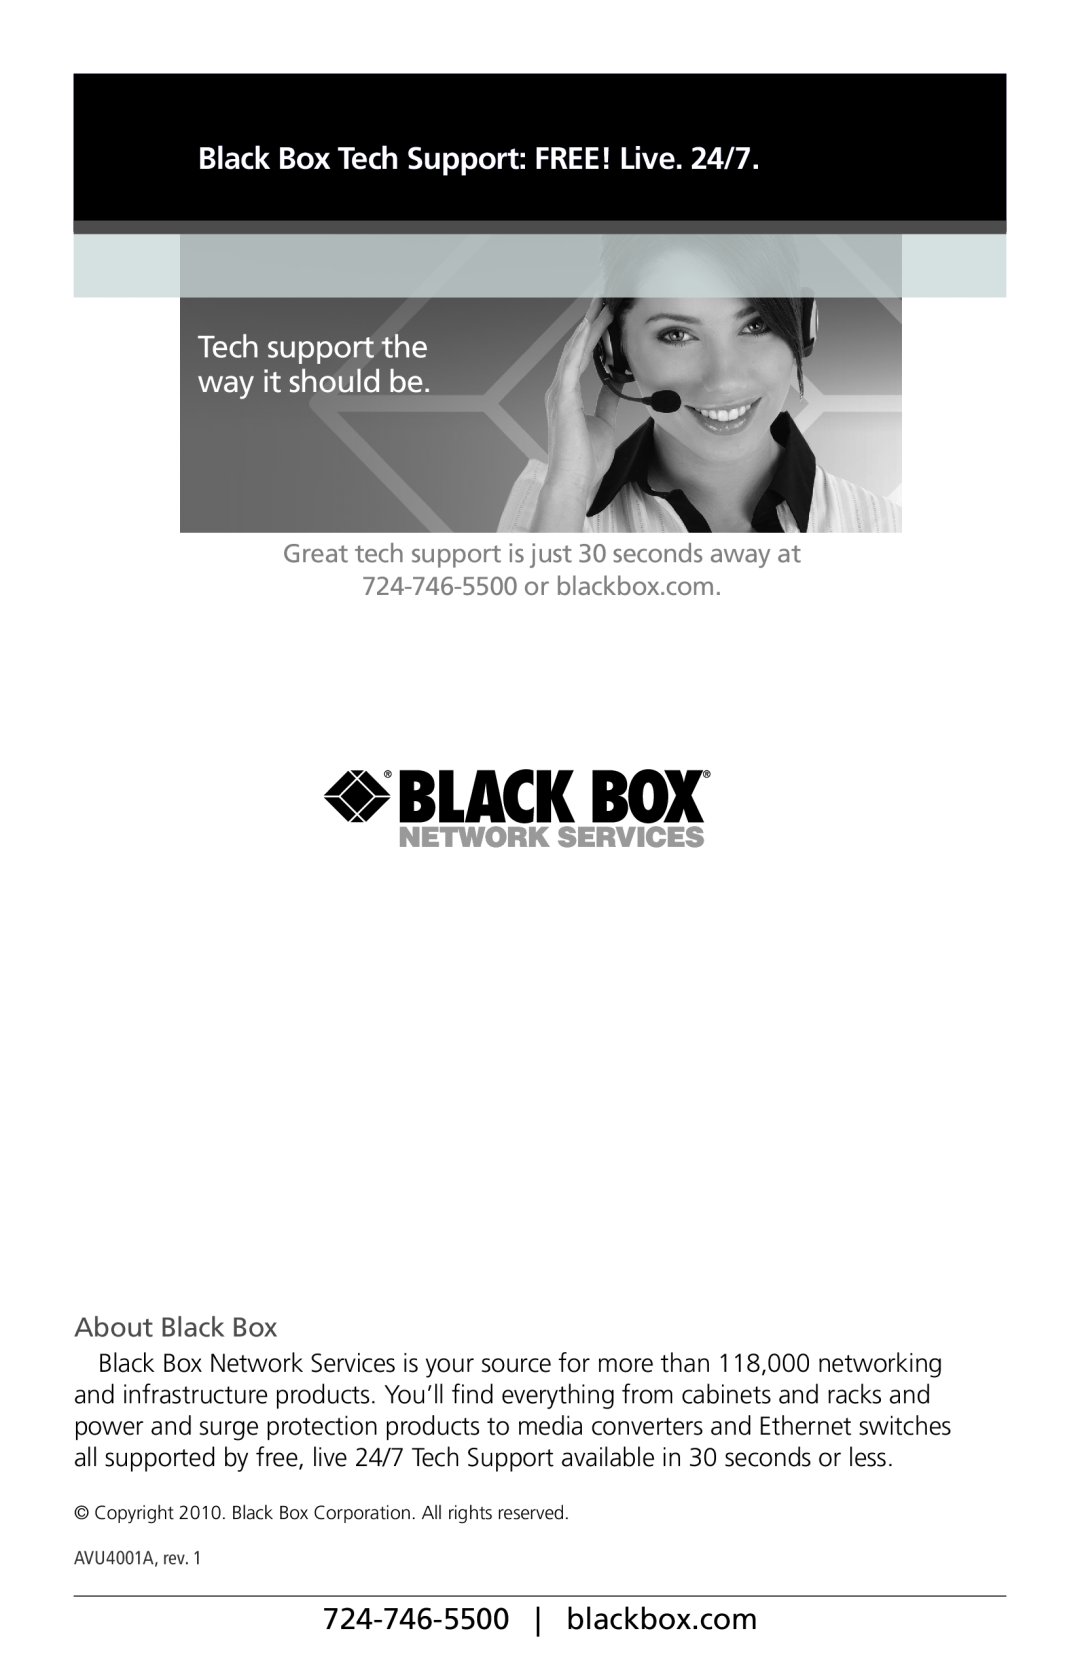 Black Box AVU4001A, AVU4001-PS Tech support the way it should be, About Black Box, Black Box Tech Support FREE! Live. 24/7 